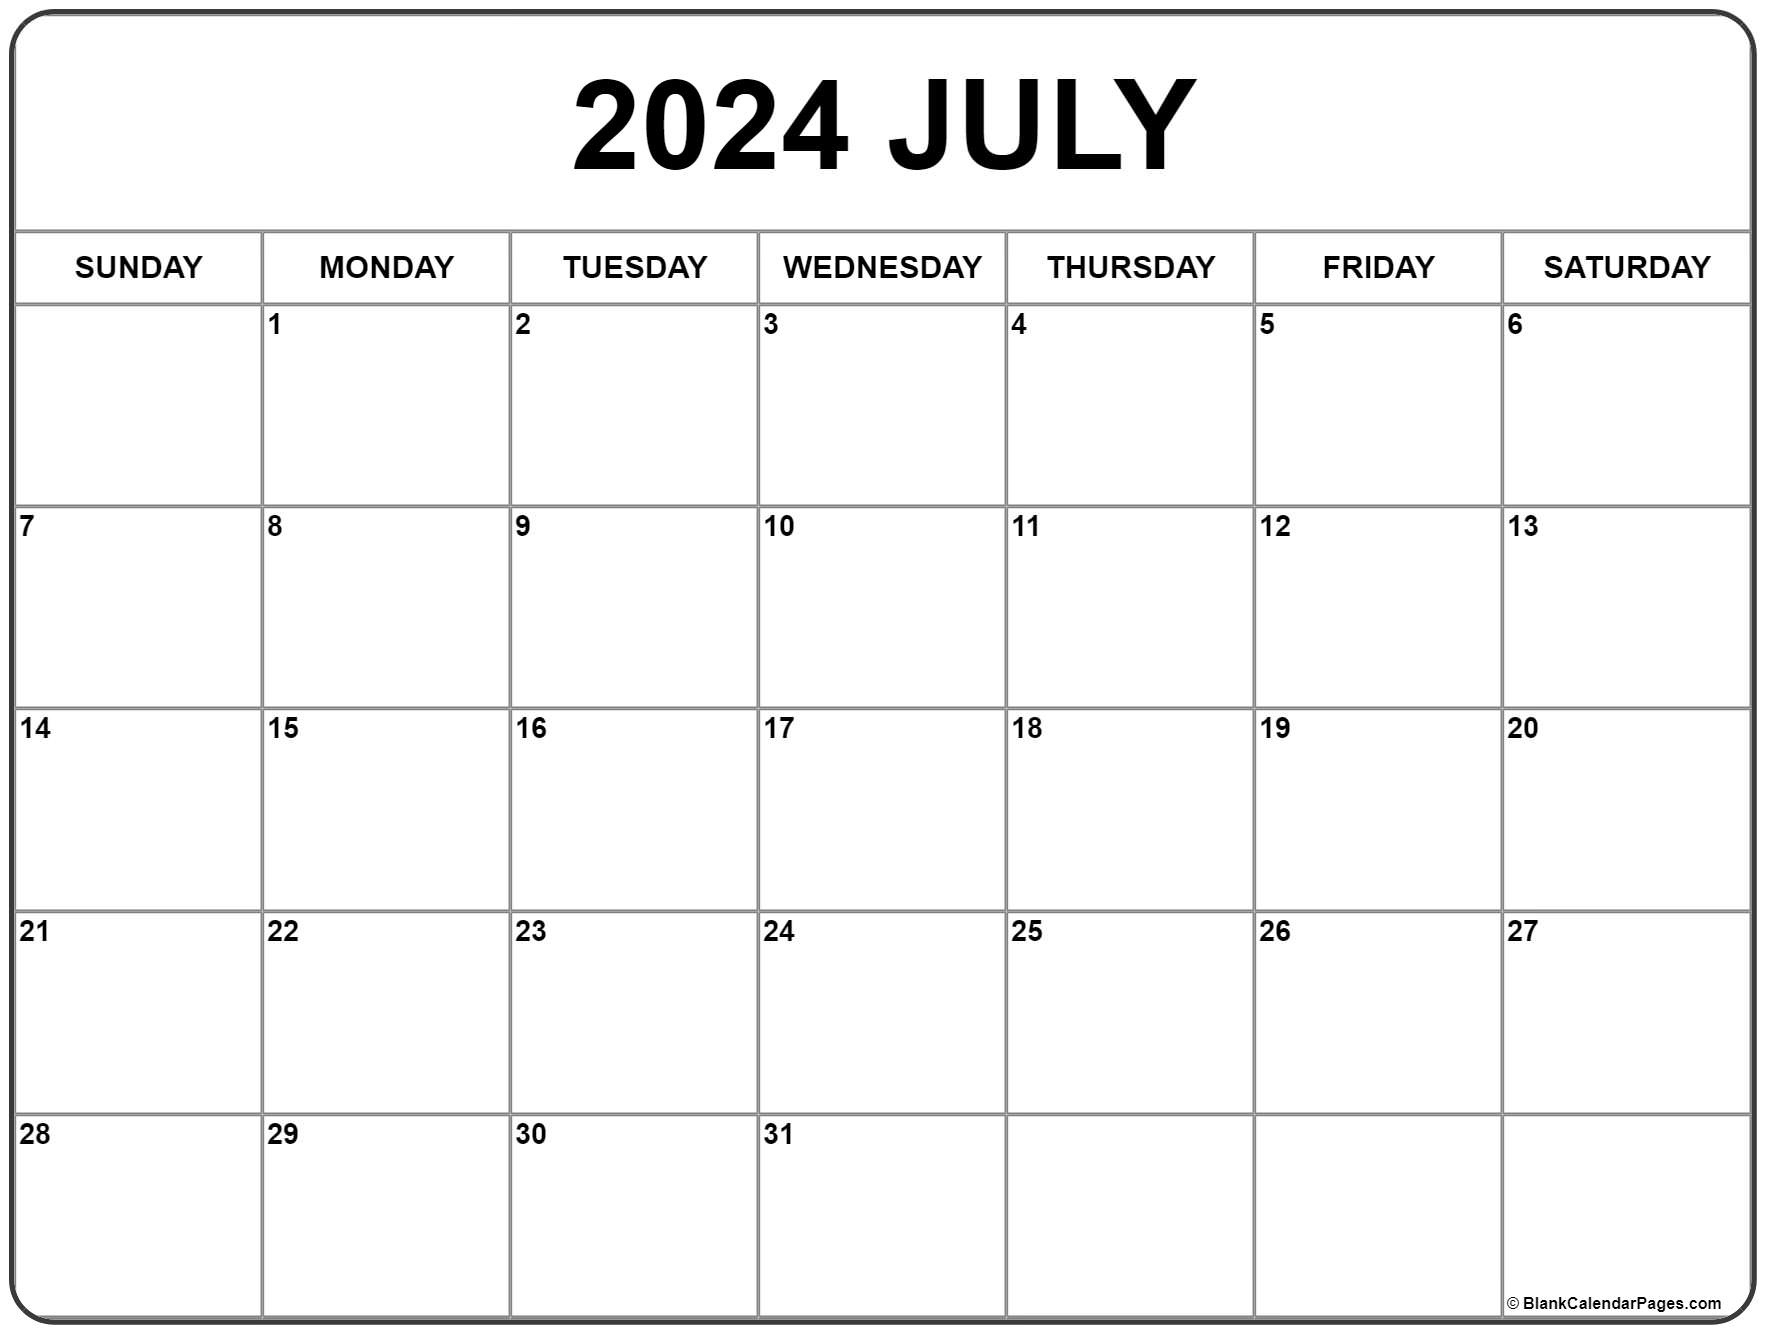 July 2024 Calendar | Free Printable Calendar within July Printable Calendar 2024 Free